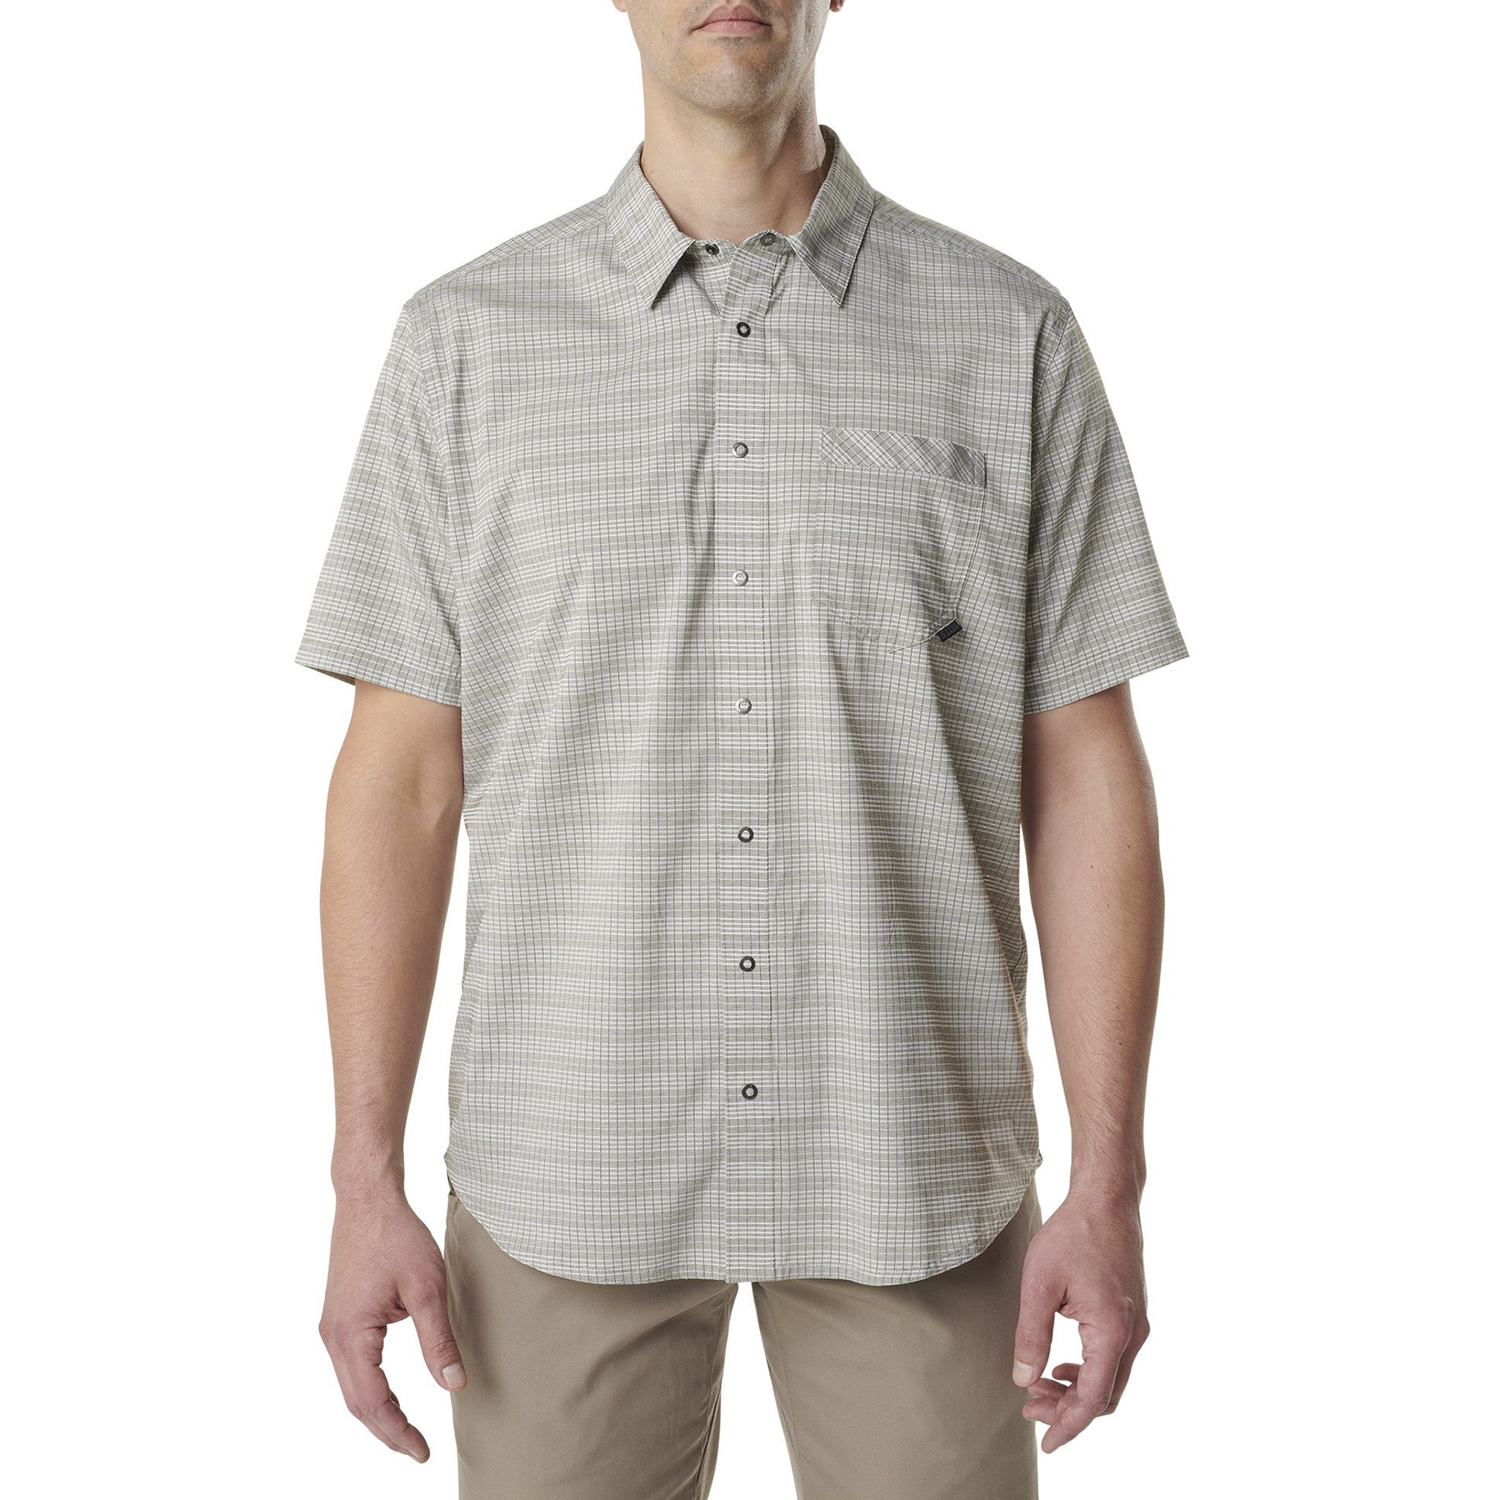 5.11 Tactical Inteprid Shirt